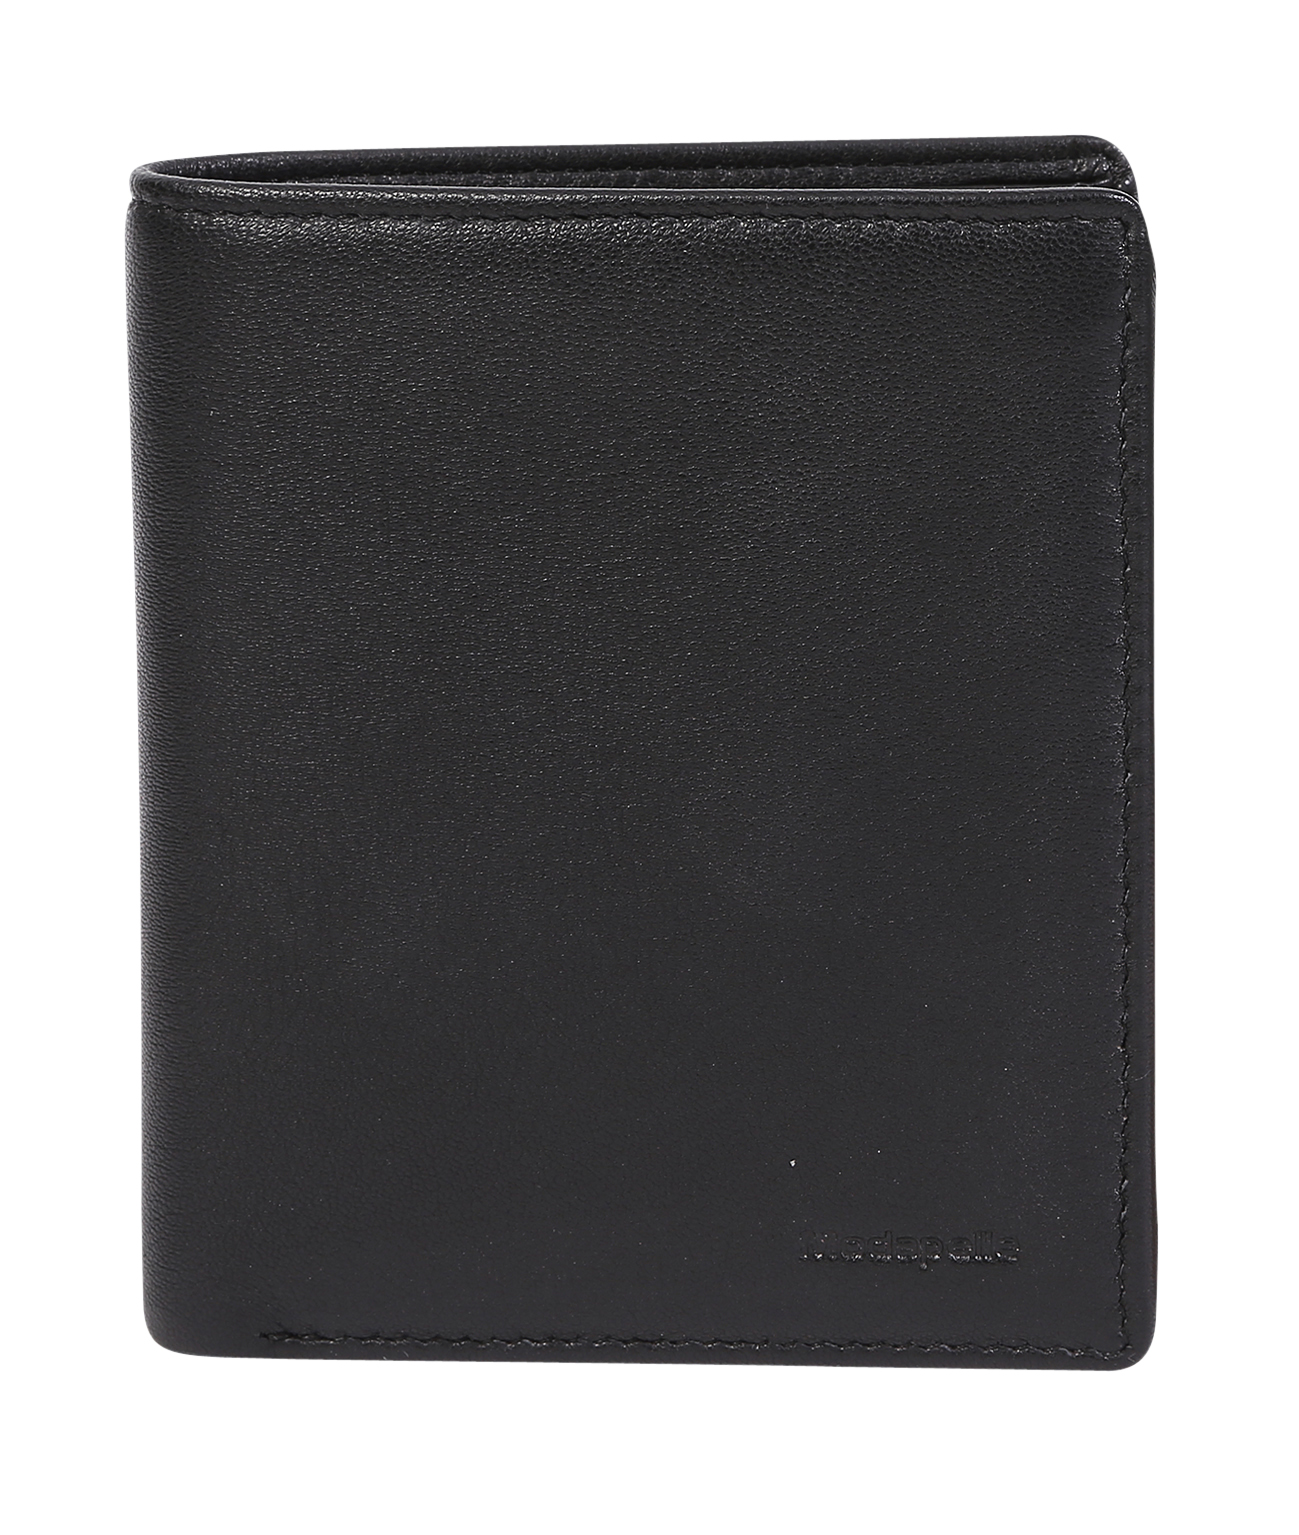 Mens Nappa Leather Wallet 5021 Black - Modapelle Direct